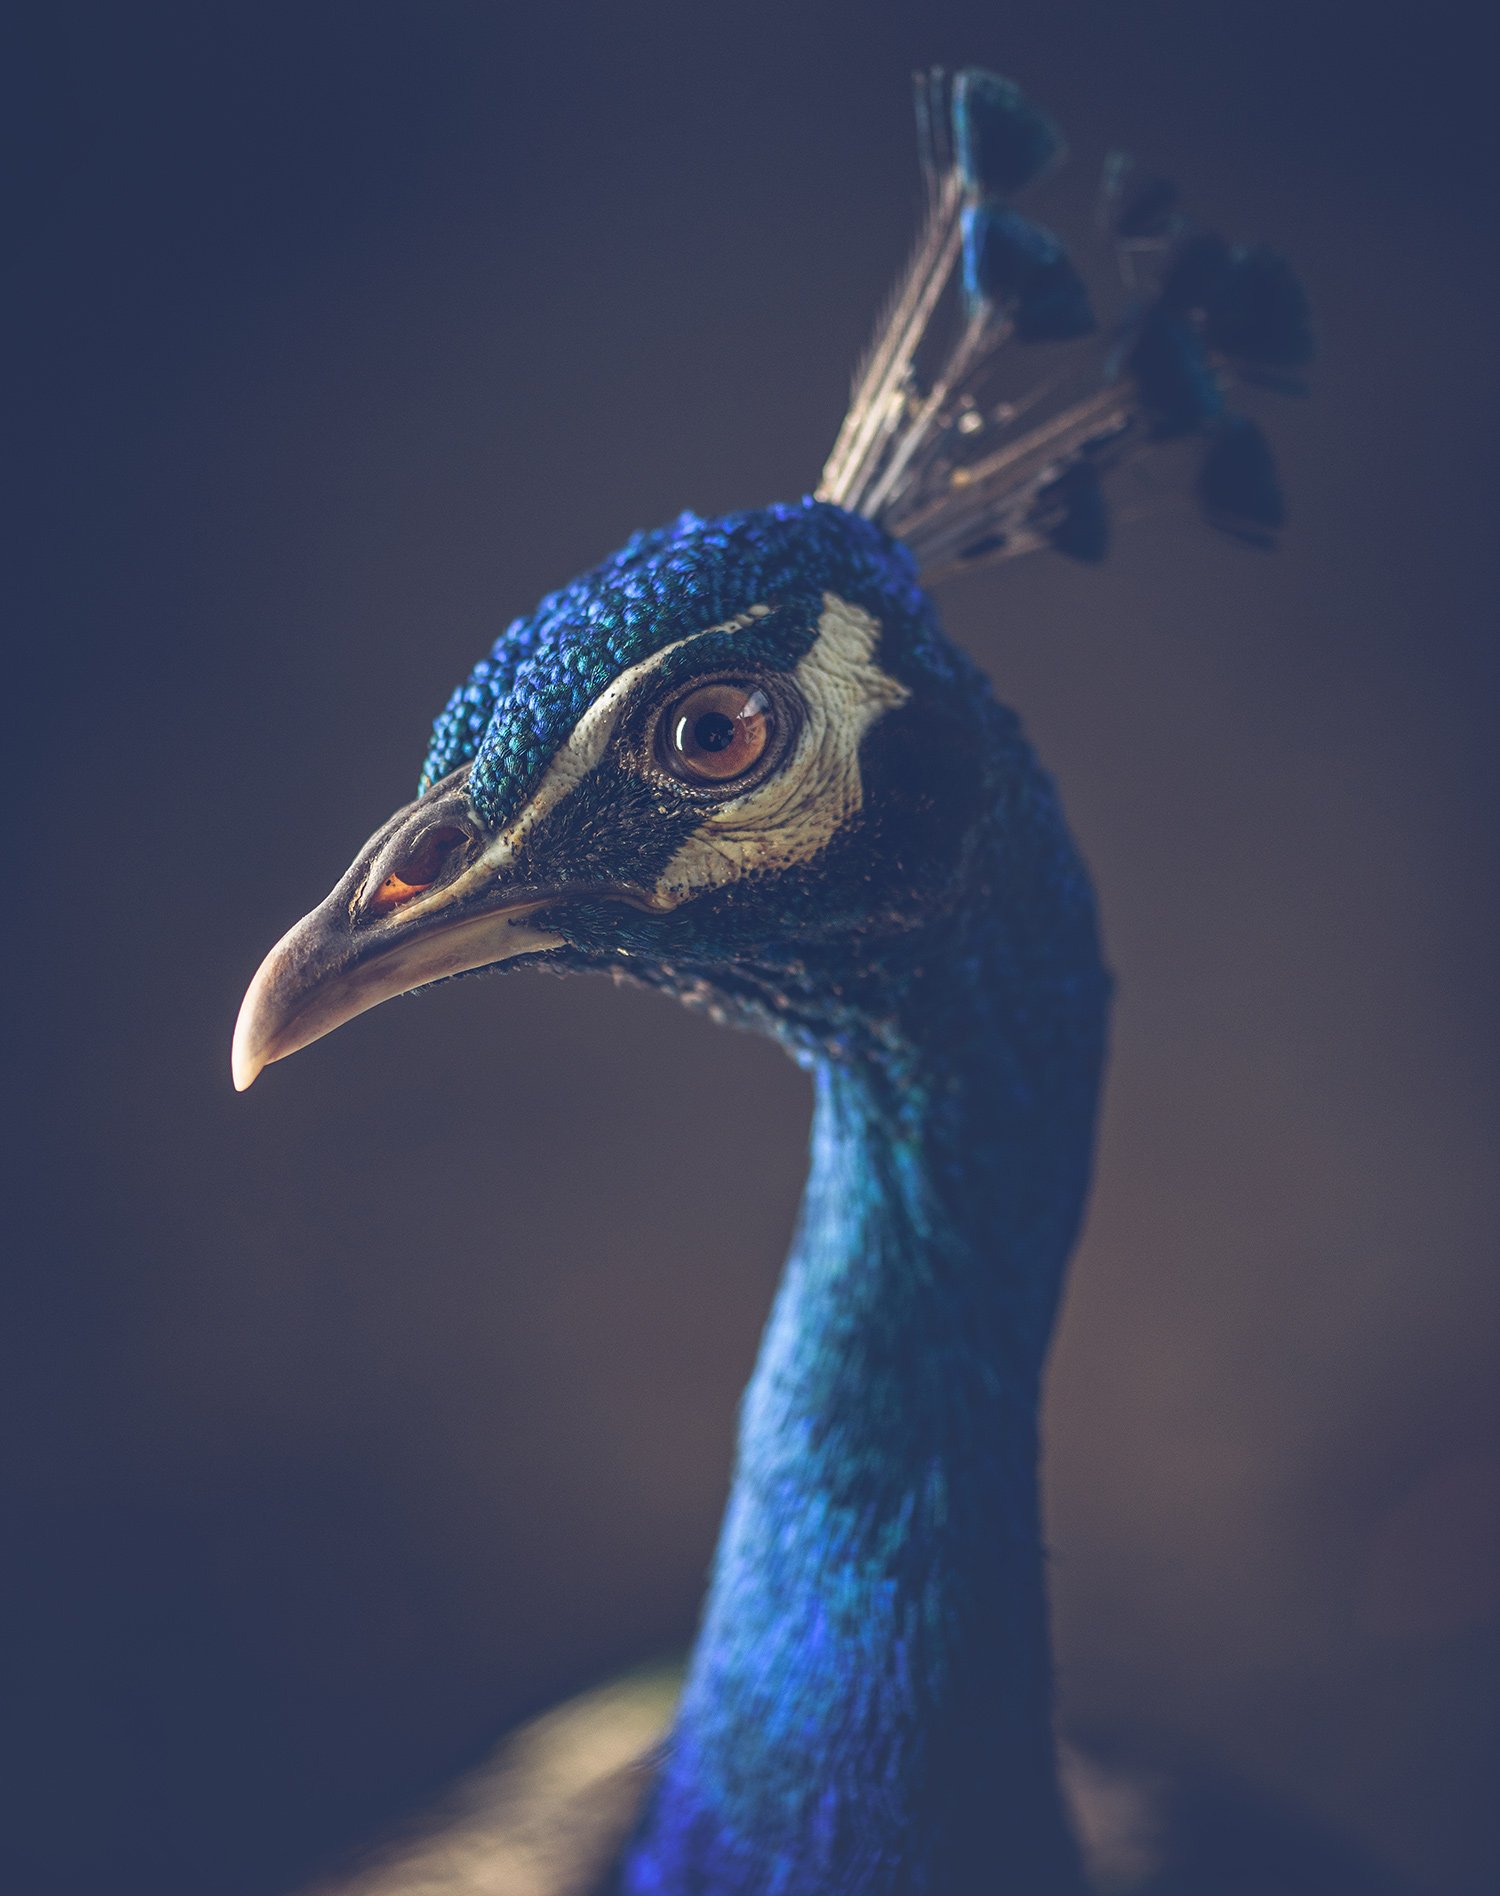 peacock-2.jpg